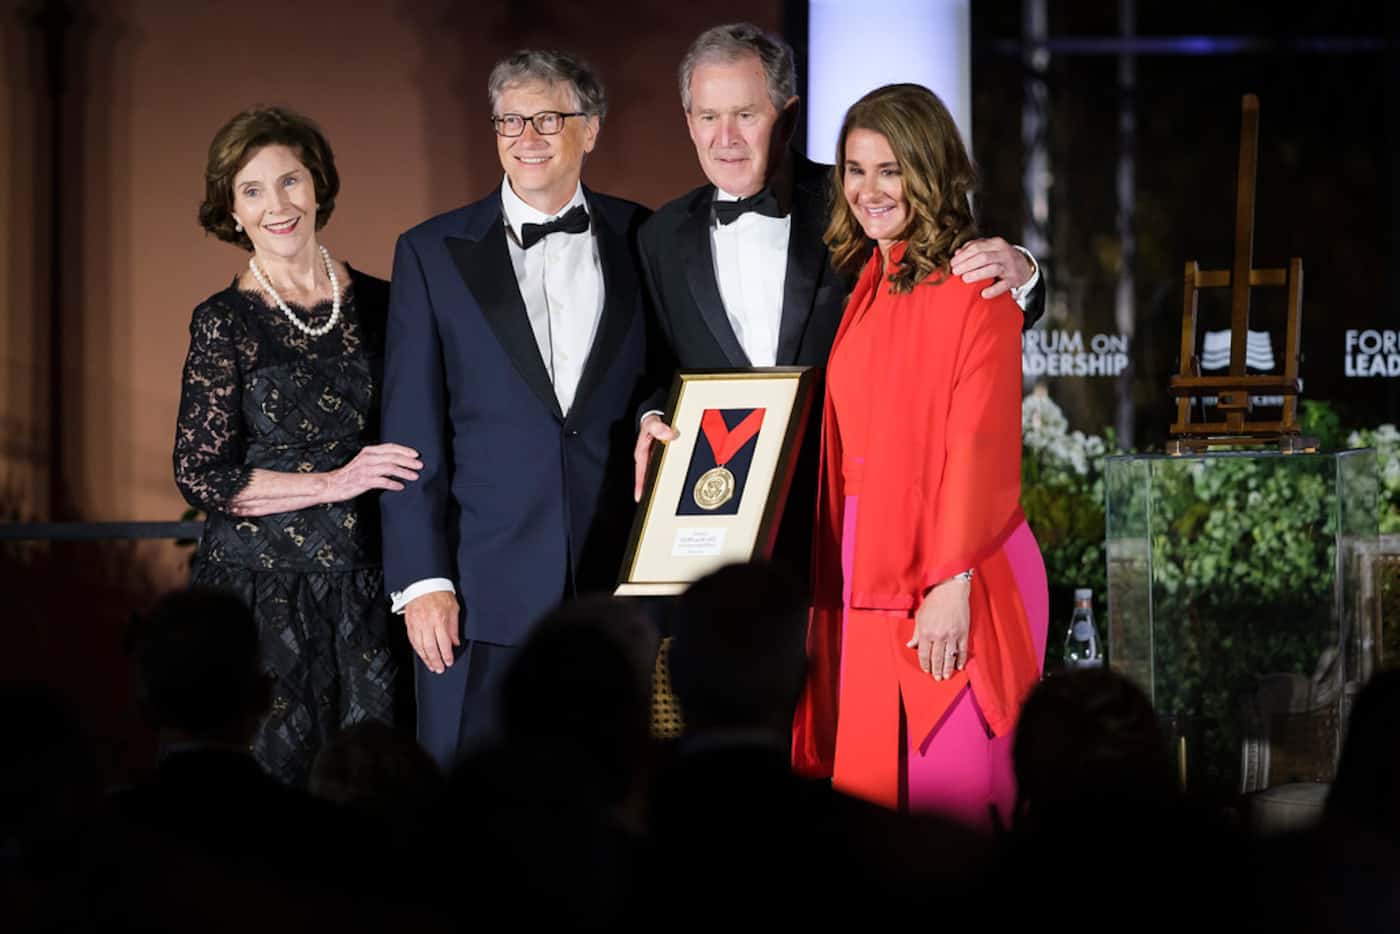 Bill and Melinda Gates received the George W. Bush Medal for Distinguished Leadership award...